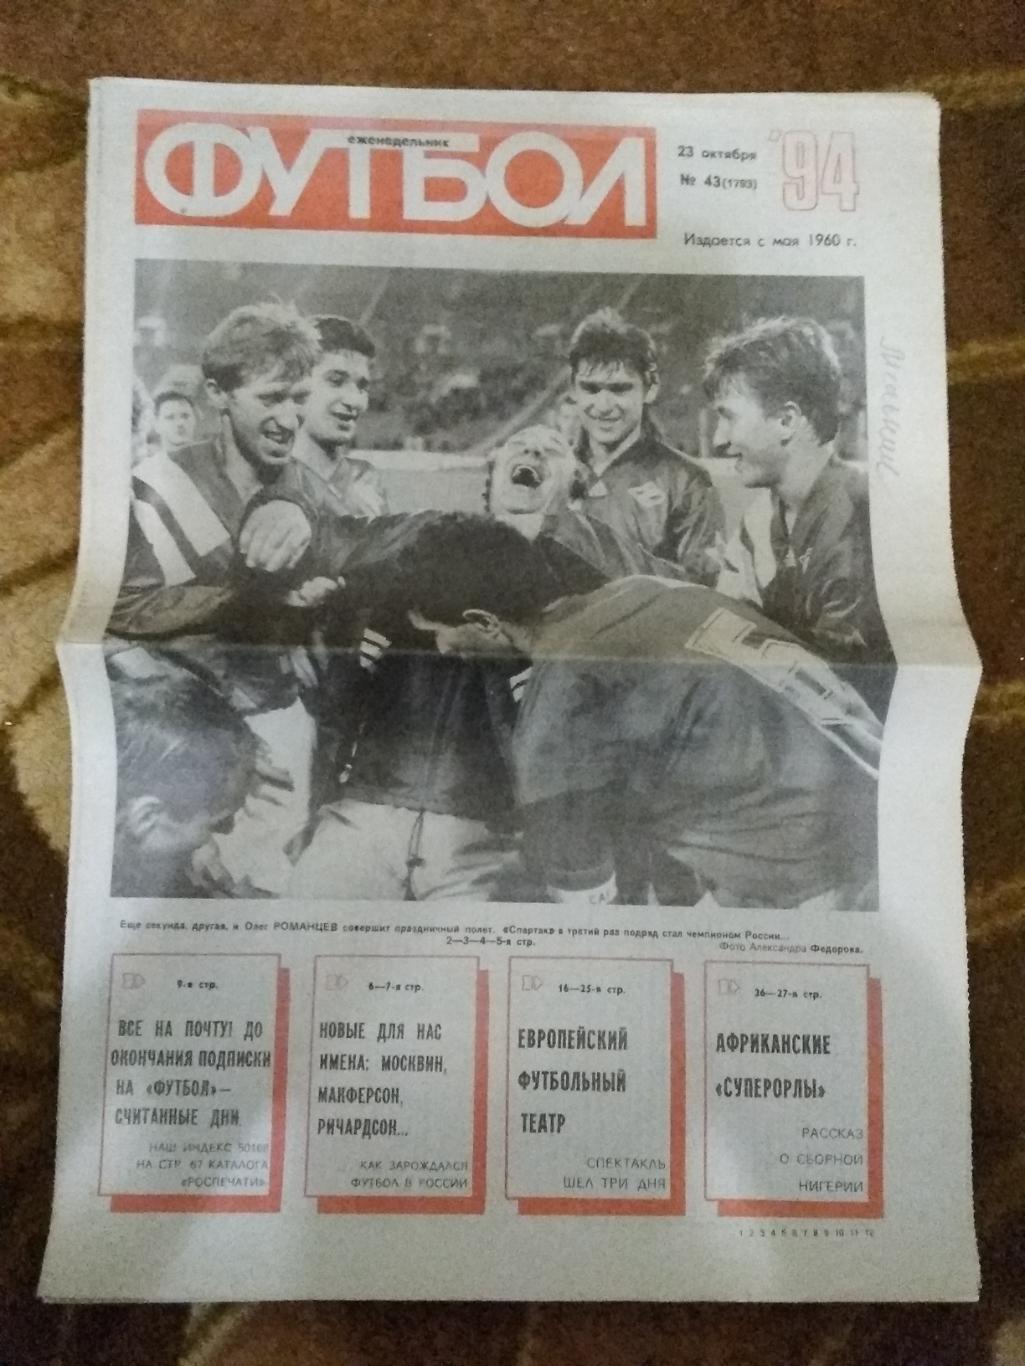 Футбол № 43 1994 г. (ЕК. Спартак,Динамо,Текстильщик).